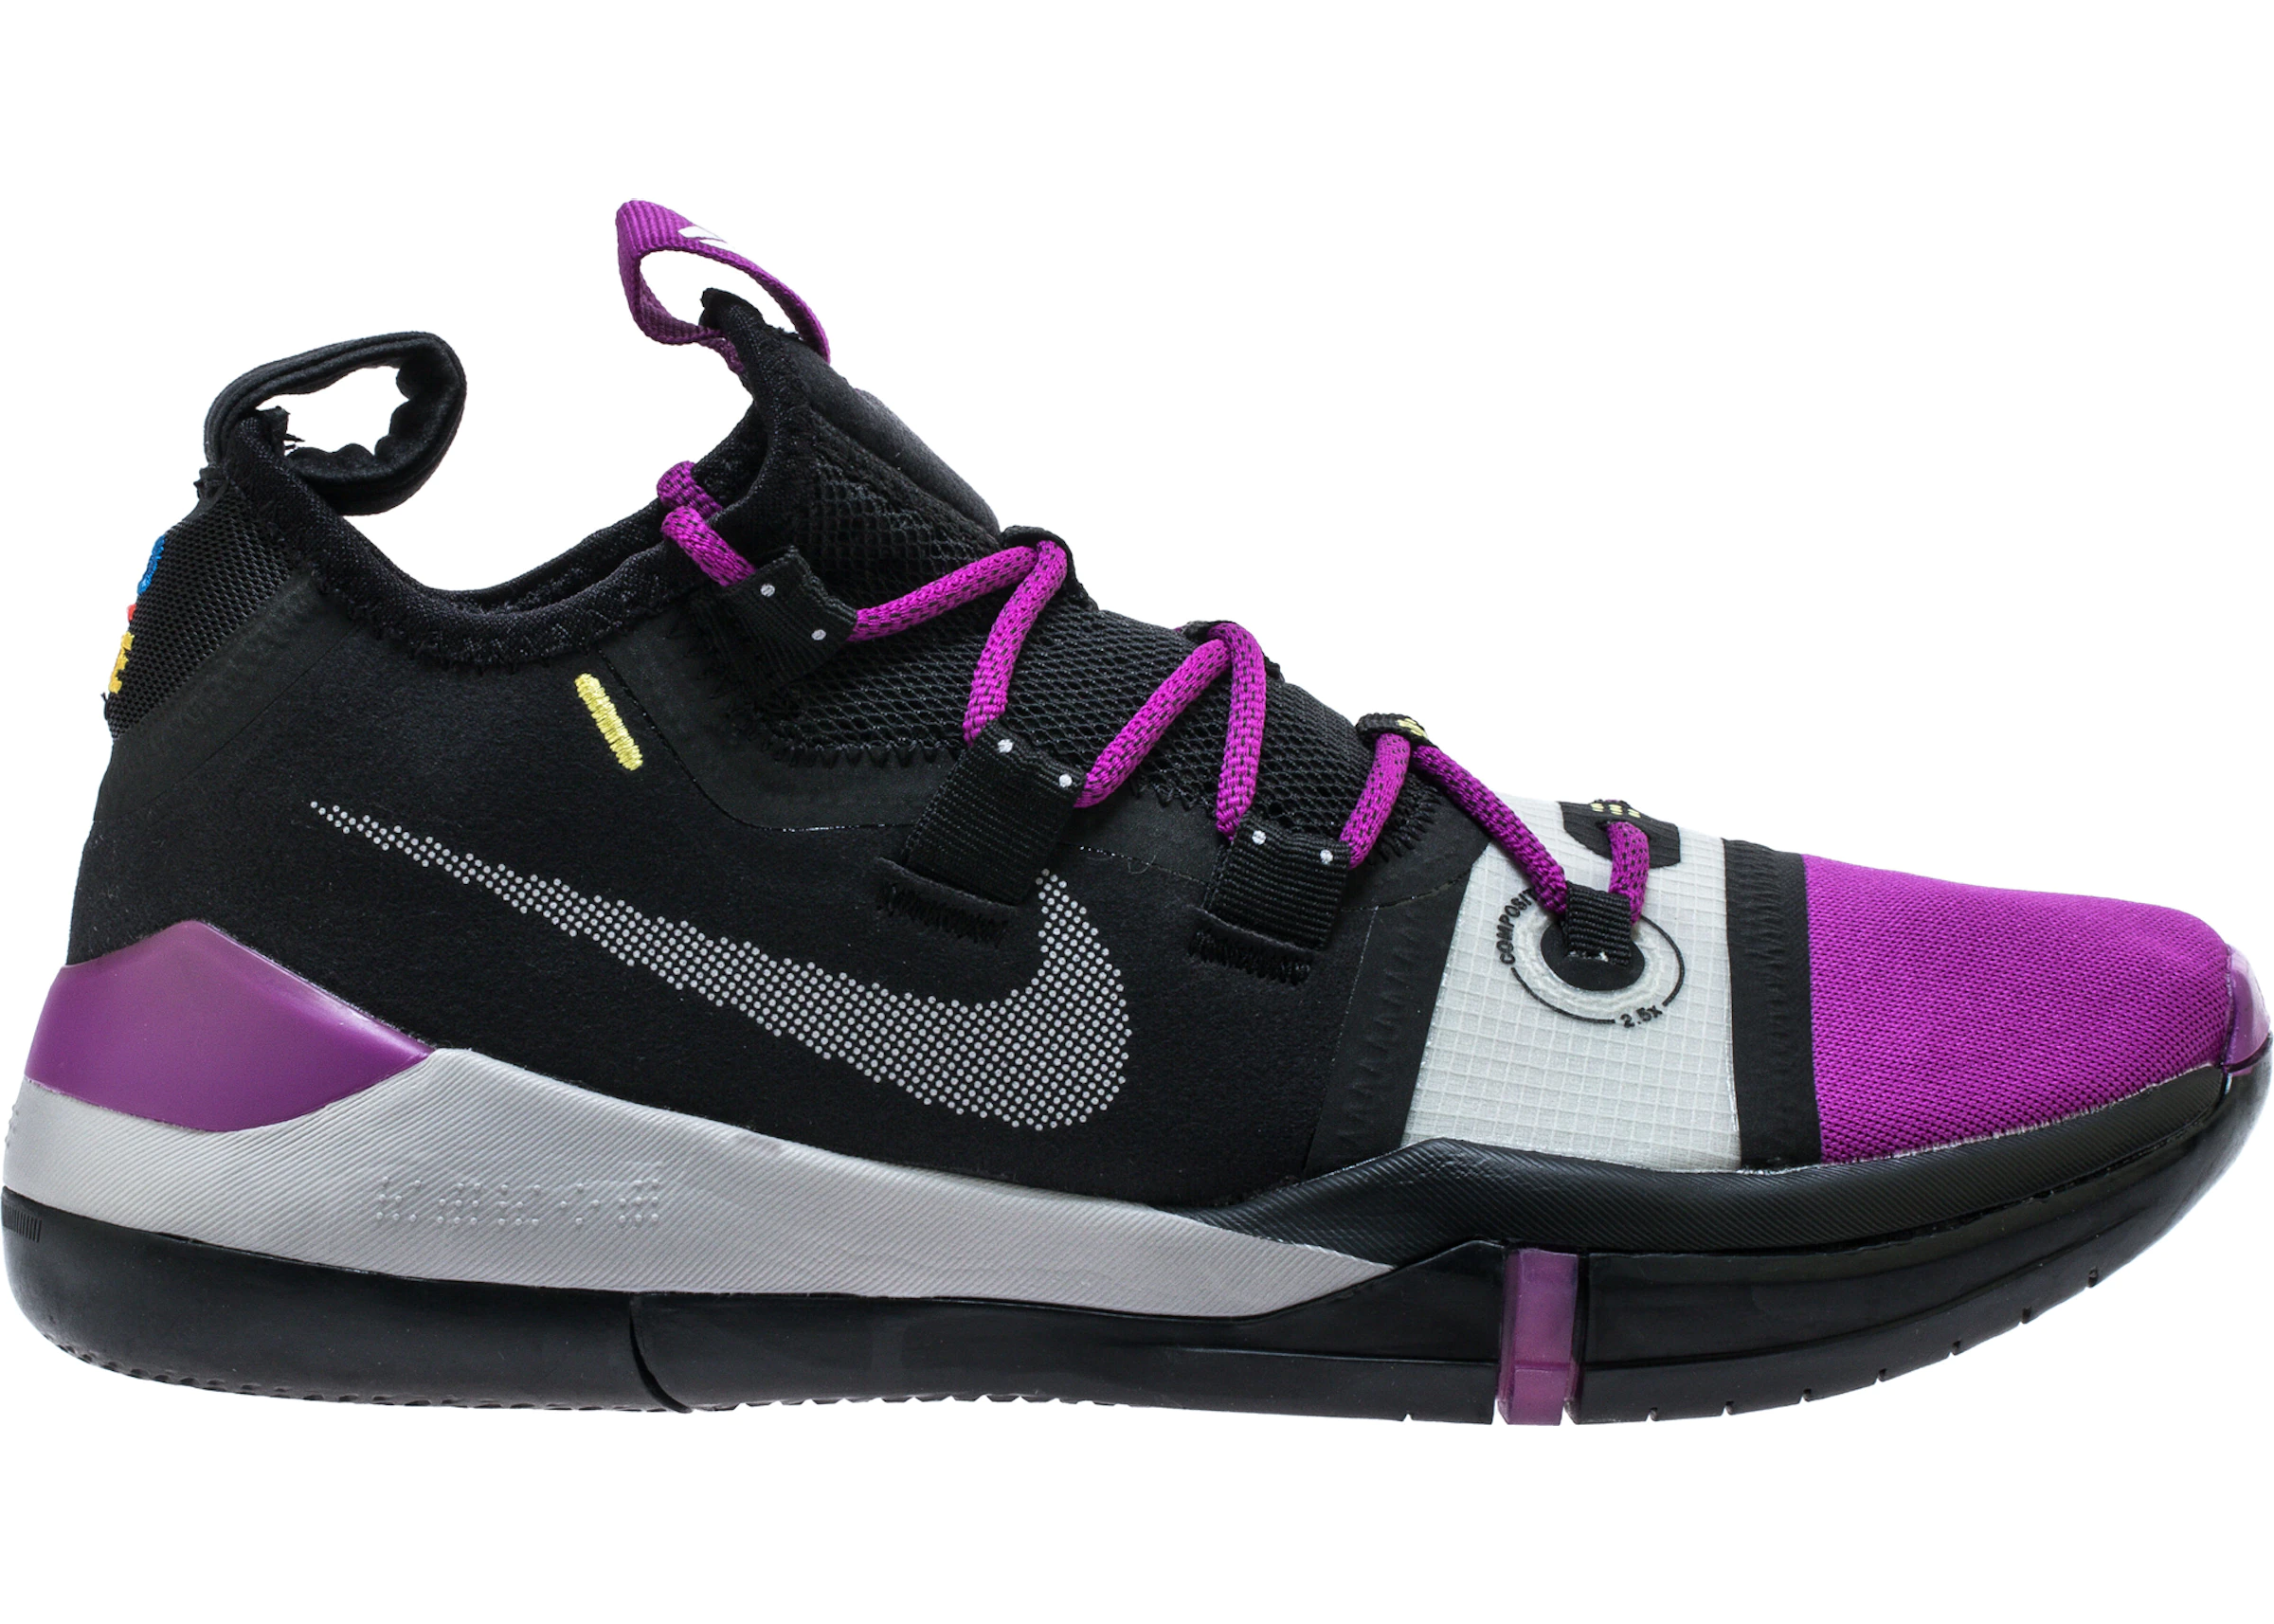 kobes ad | Nike Kobe AD Black Purple